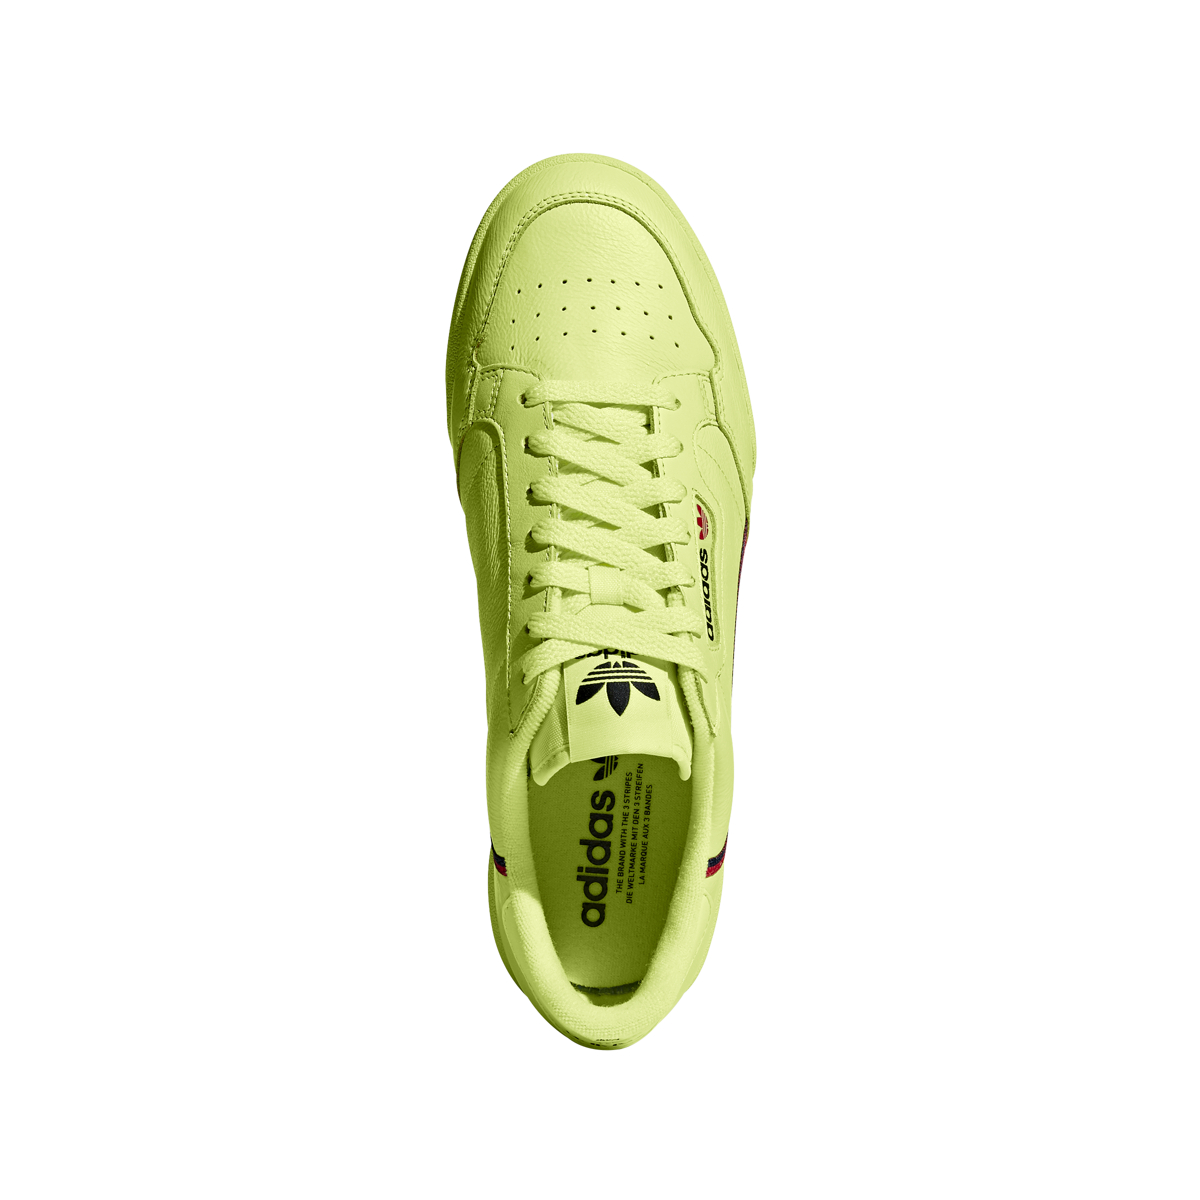 adidas originals continental 80's sneakers in semi frozen yellow